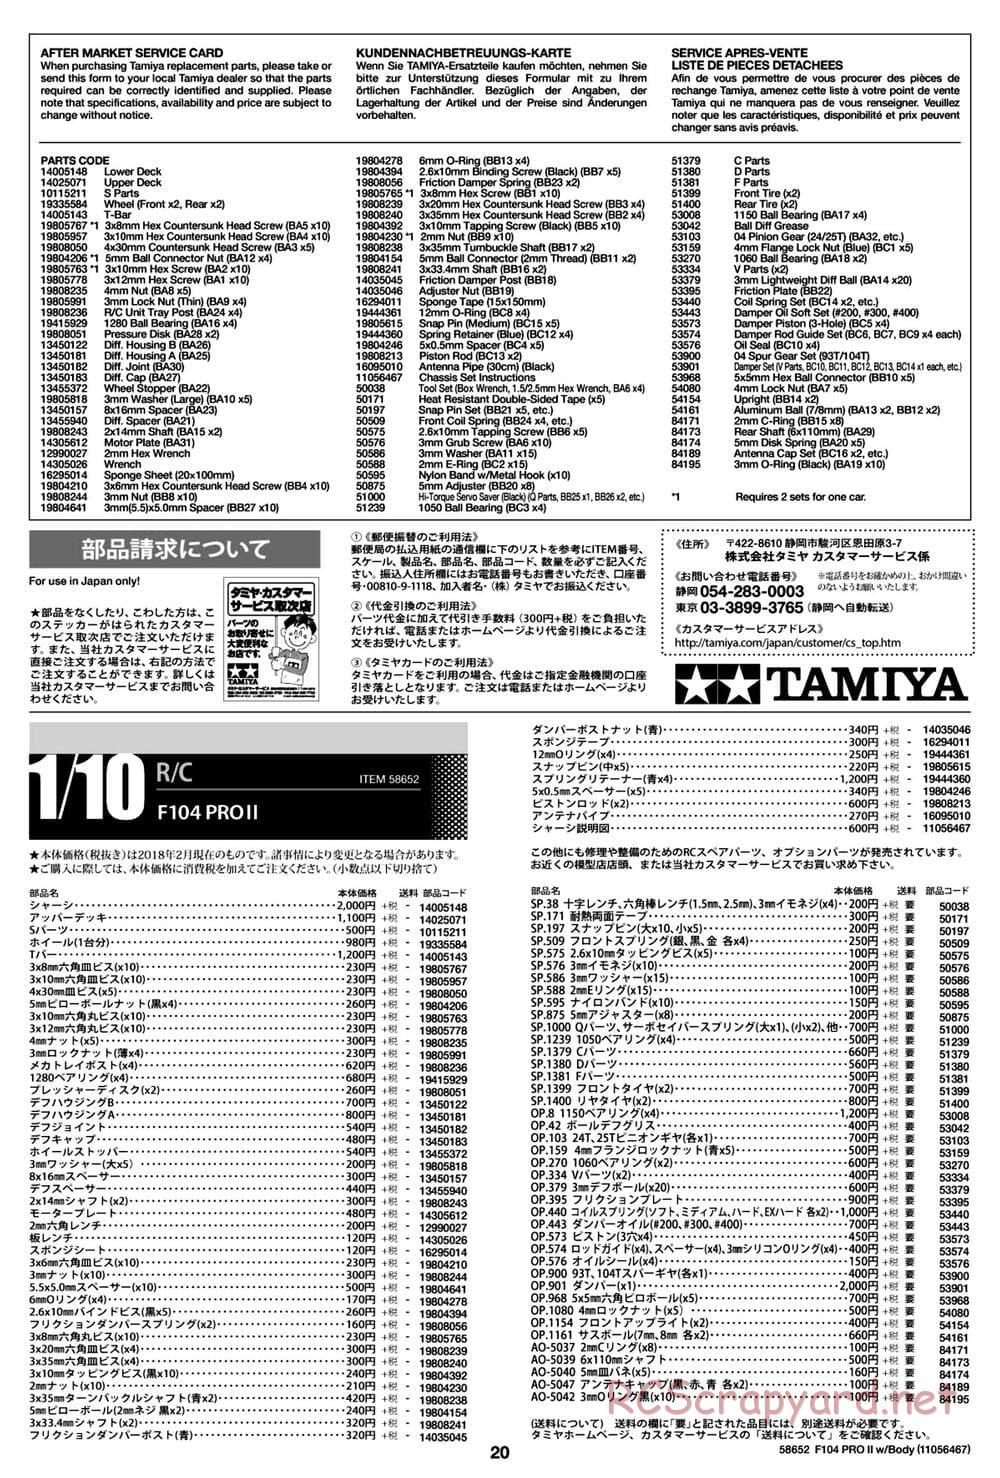 Tamiya - F104 Pro II Chassis - Manual - Page 20